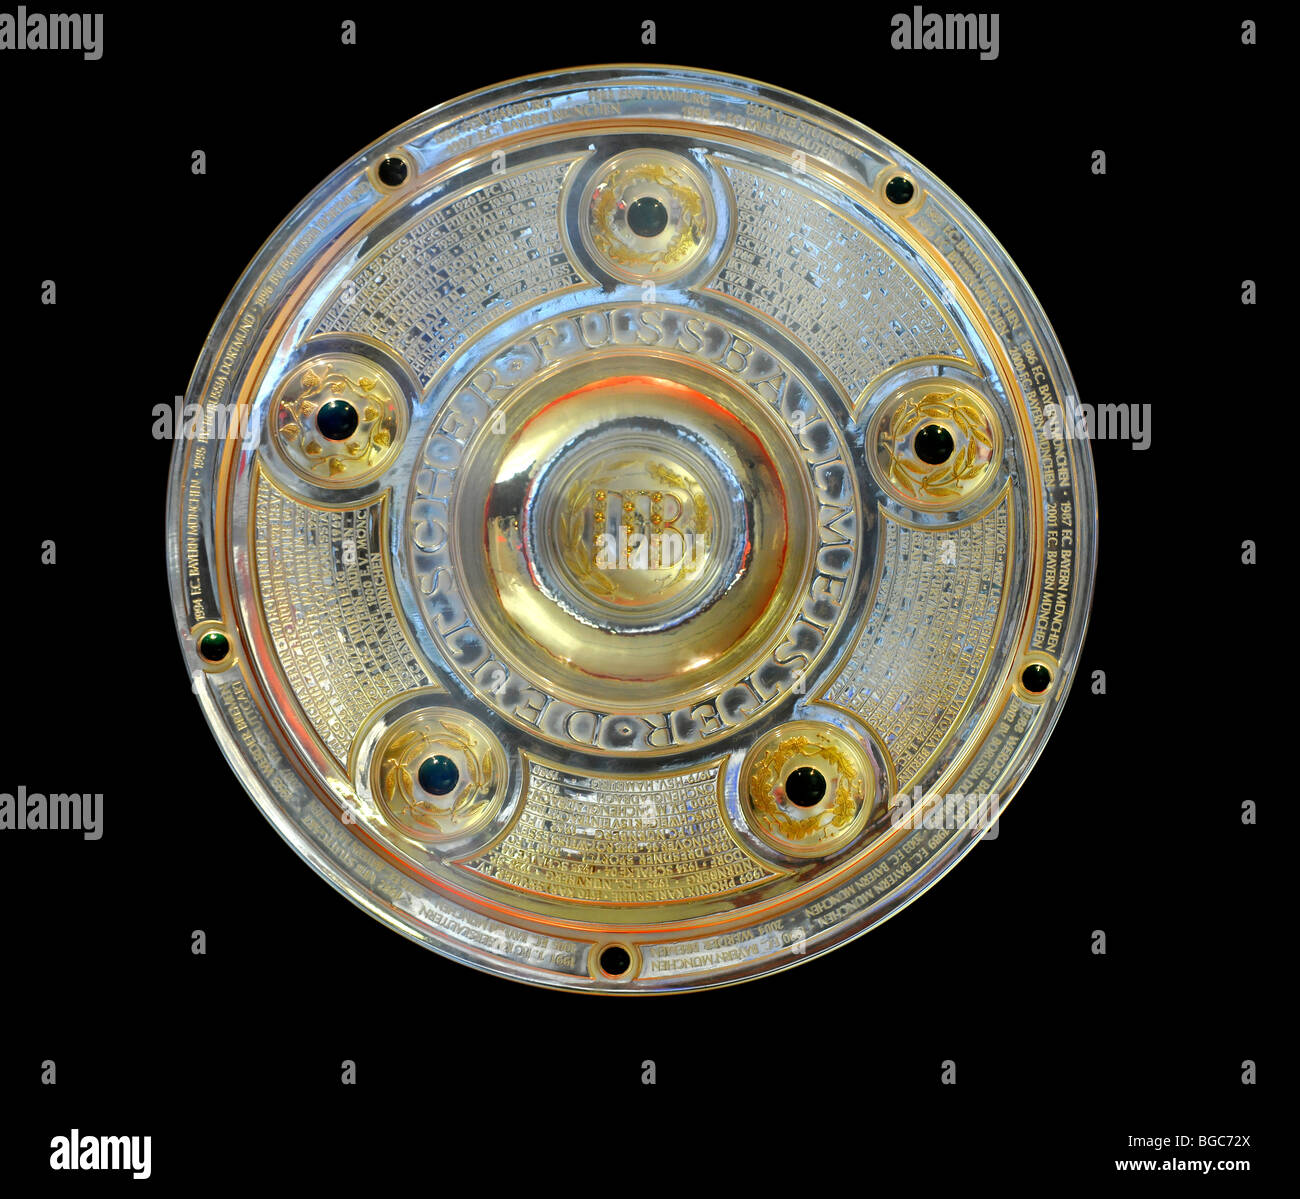 Meisterschale, Deutsche Bundesliga German football league championship trophy, cut-out Stock Photo